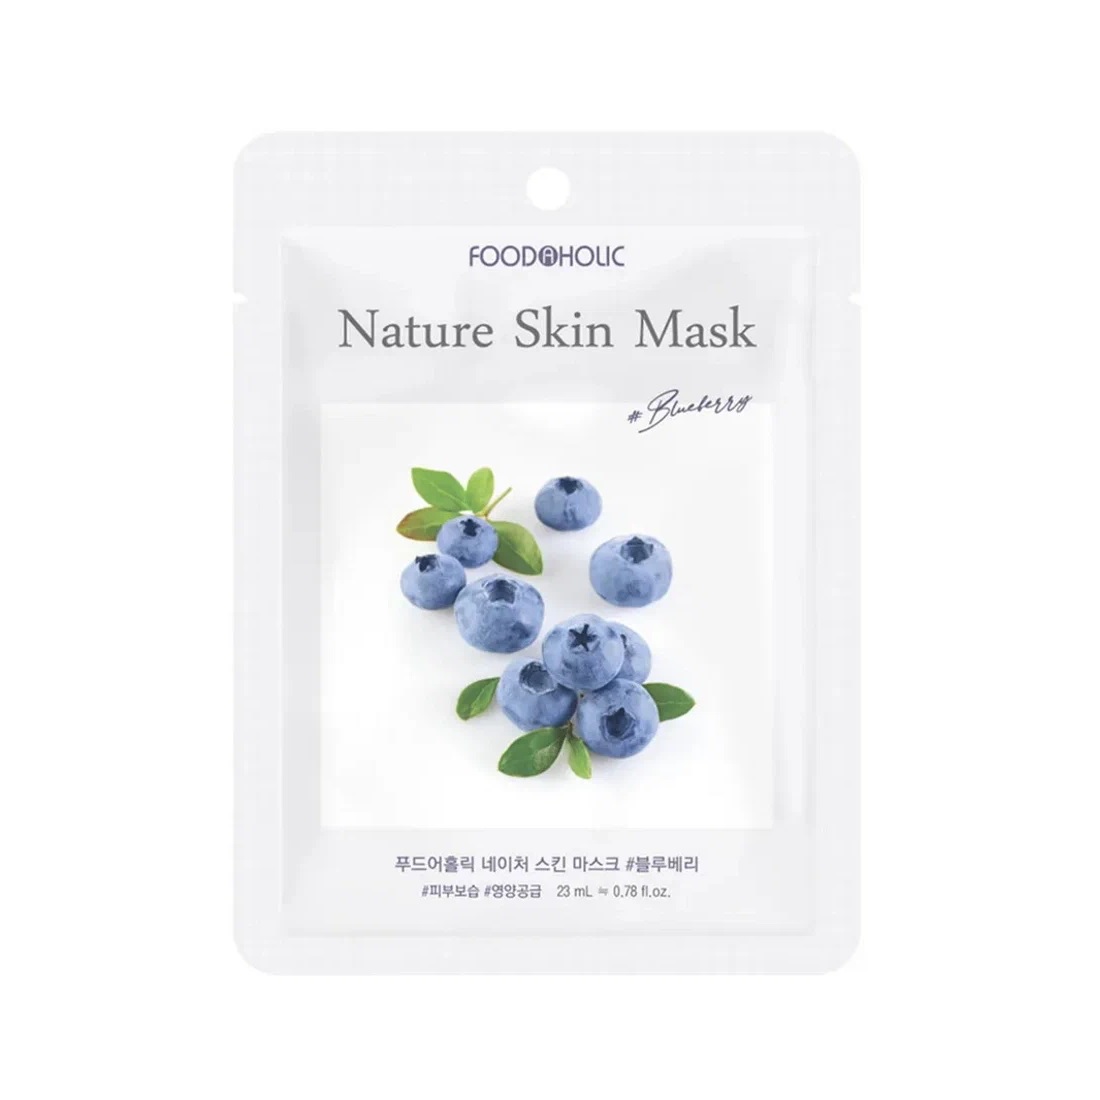 FOODAHOLIC, Тканевая маска для лица с экстрактом черники Nature Skin Mask, 25 гр.